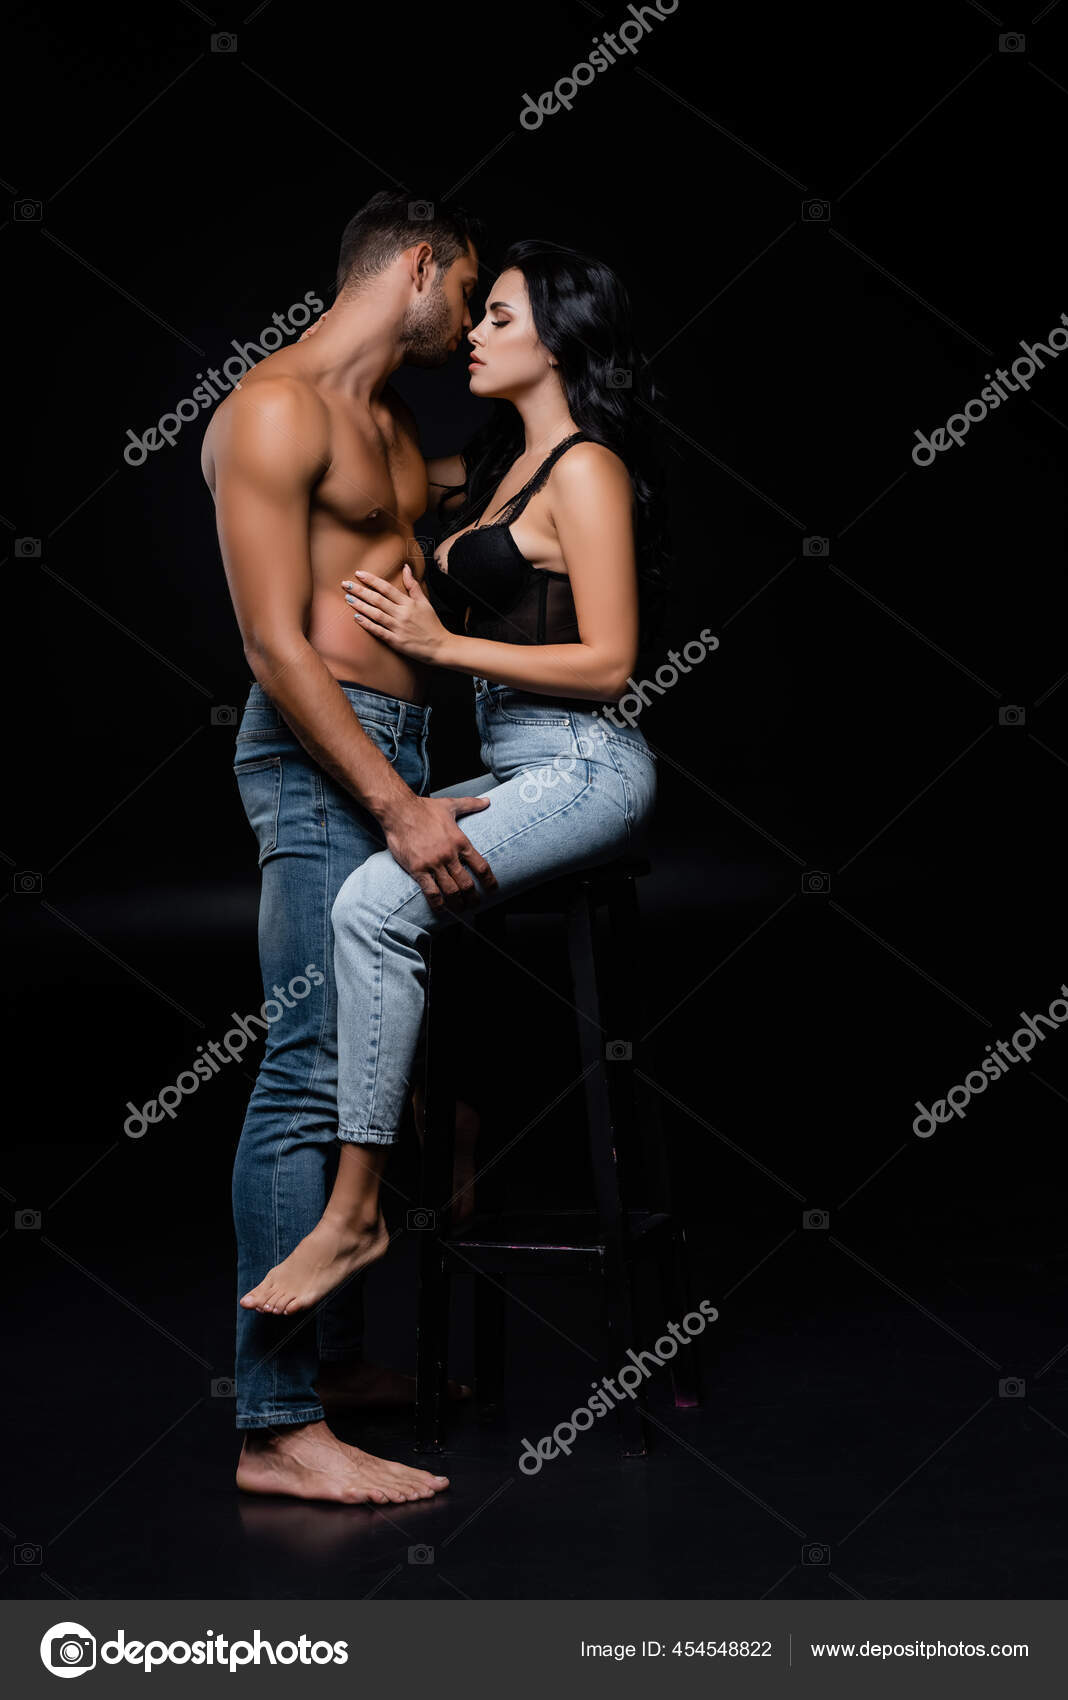 Passionate Woman Touching Sexy Boyfriend While Sitting Chair Black Background Stock Photo by ©VitalikRadko 454548822